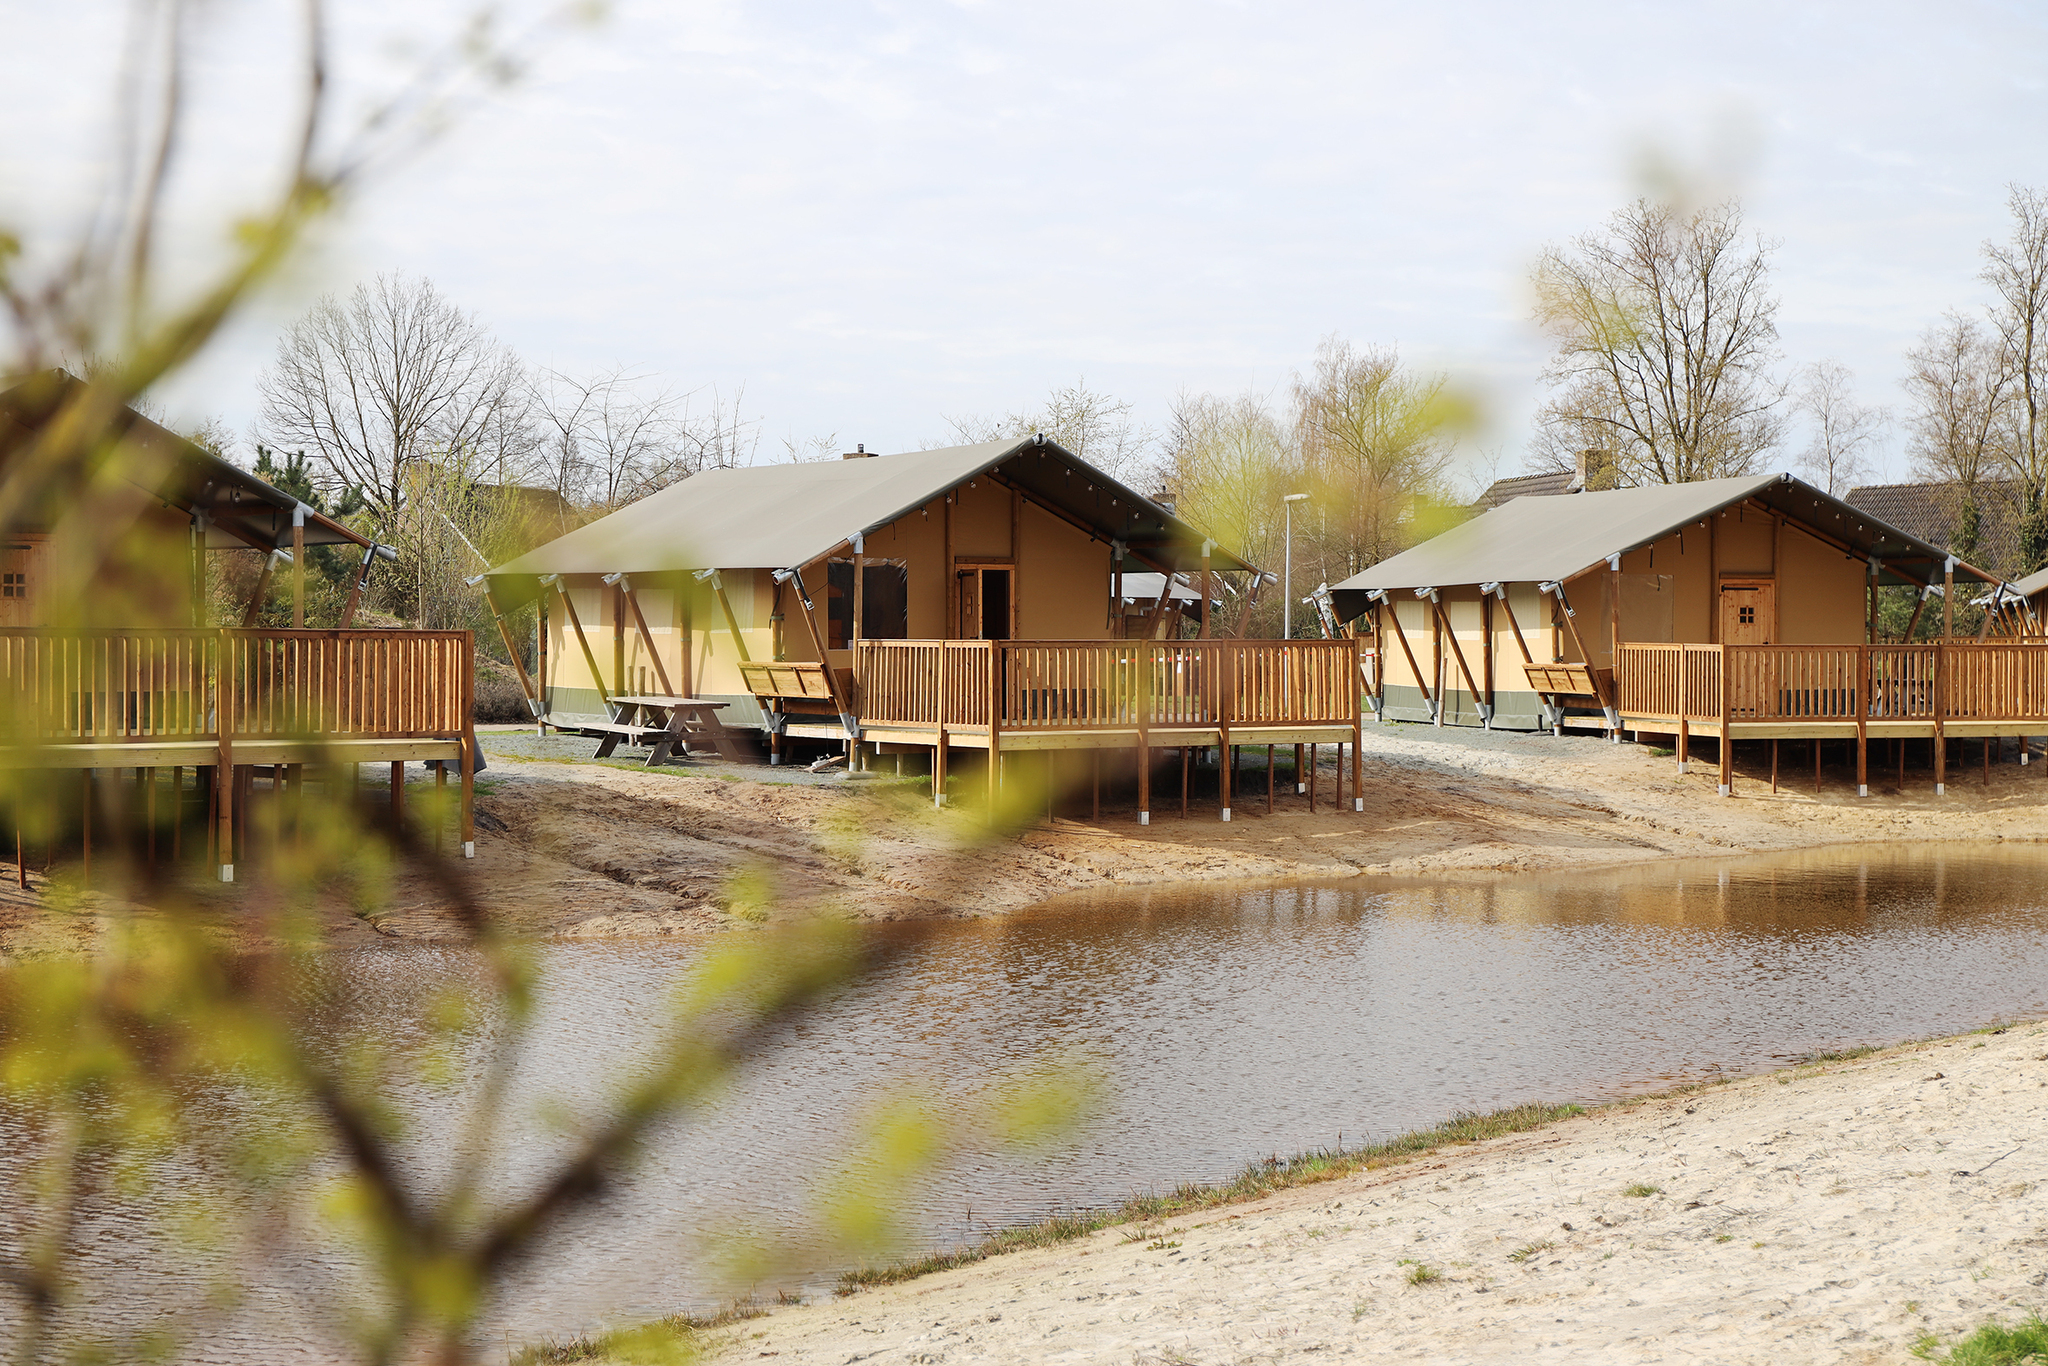 Accommodation - 6 Person Luxury Safari Tent At The Waterfront - Vakantiepark Sallandshoeve